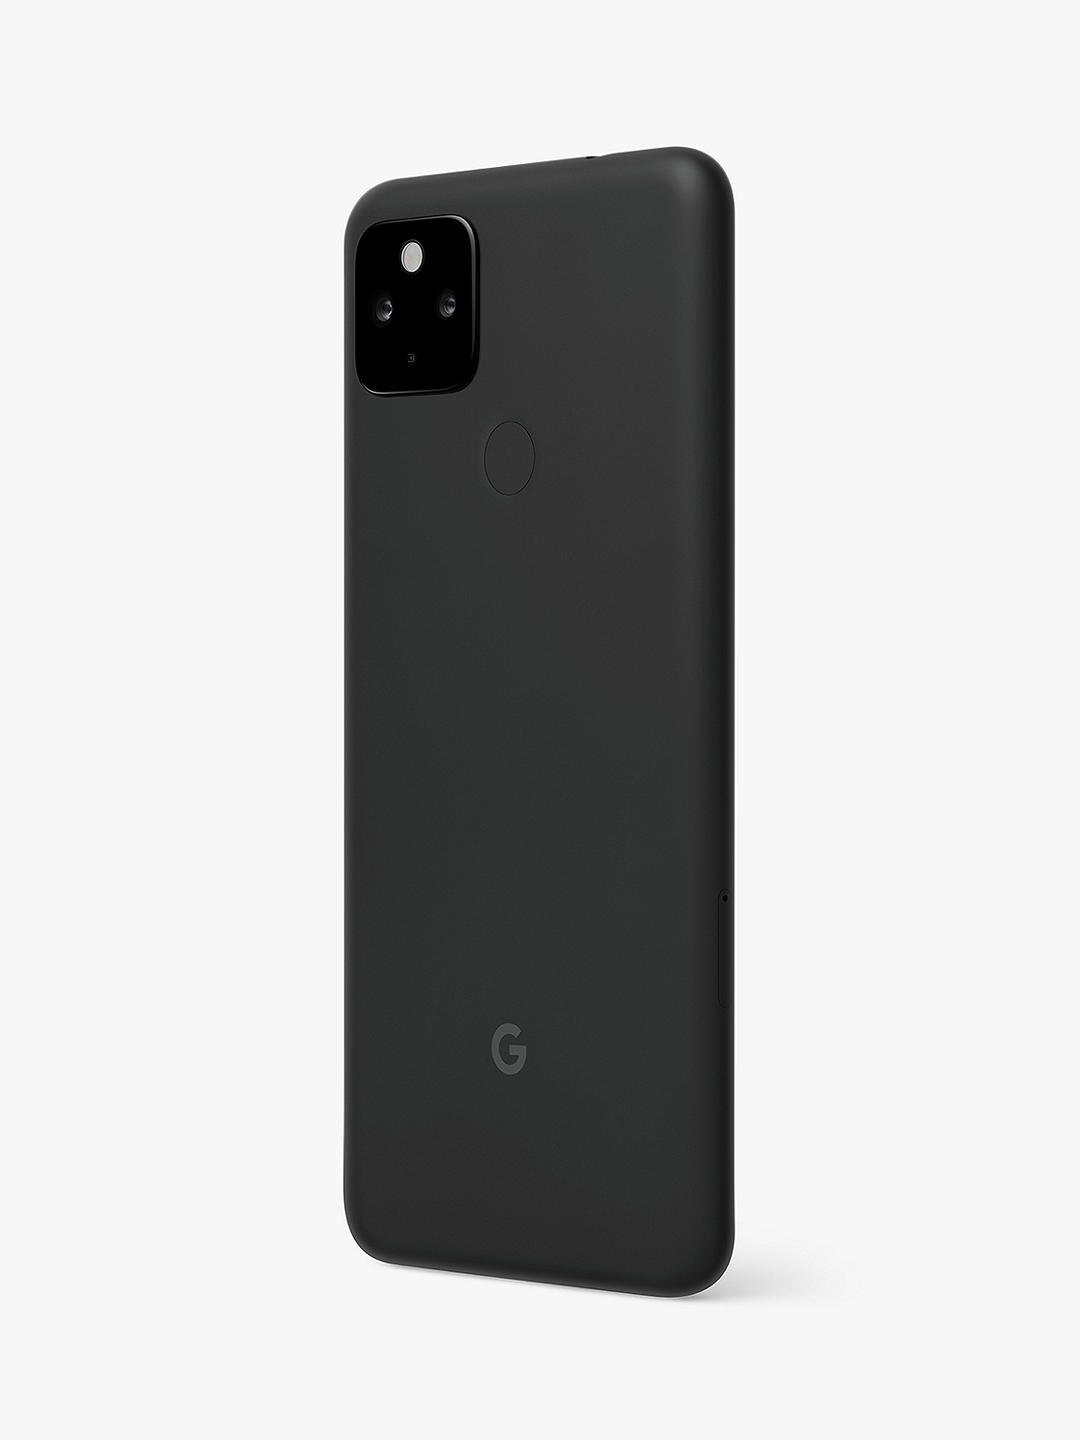 Google Pixel 4a 5g Leak